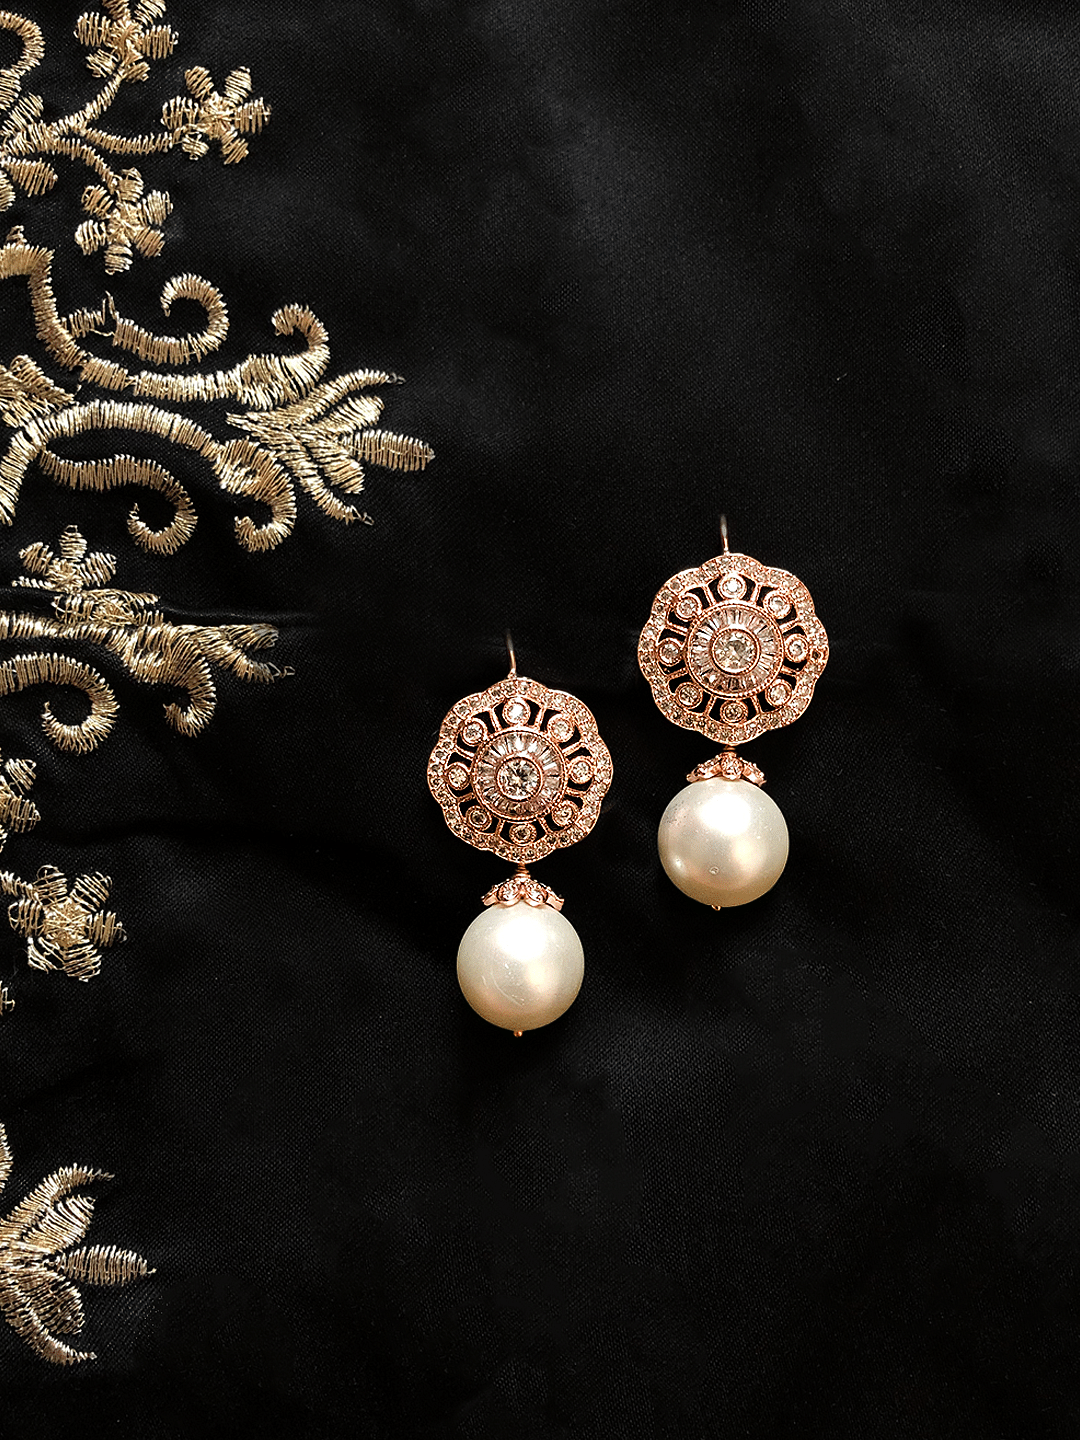 Buy Minimalist 22K Gold Earrings Stud Earrings Rose Gold Elegant Online  in India  Etsy  Gold earrings studs Gold earrings 22k gold earrings